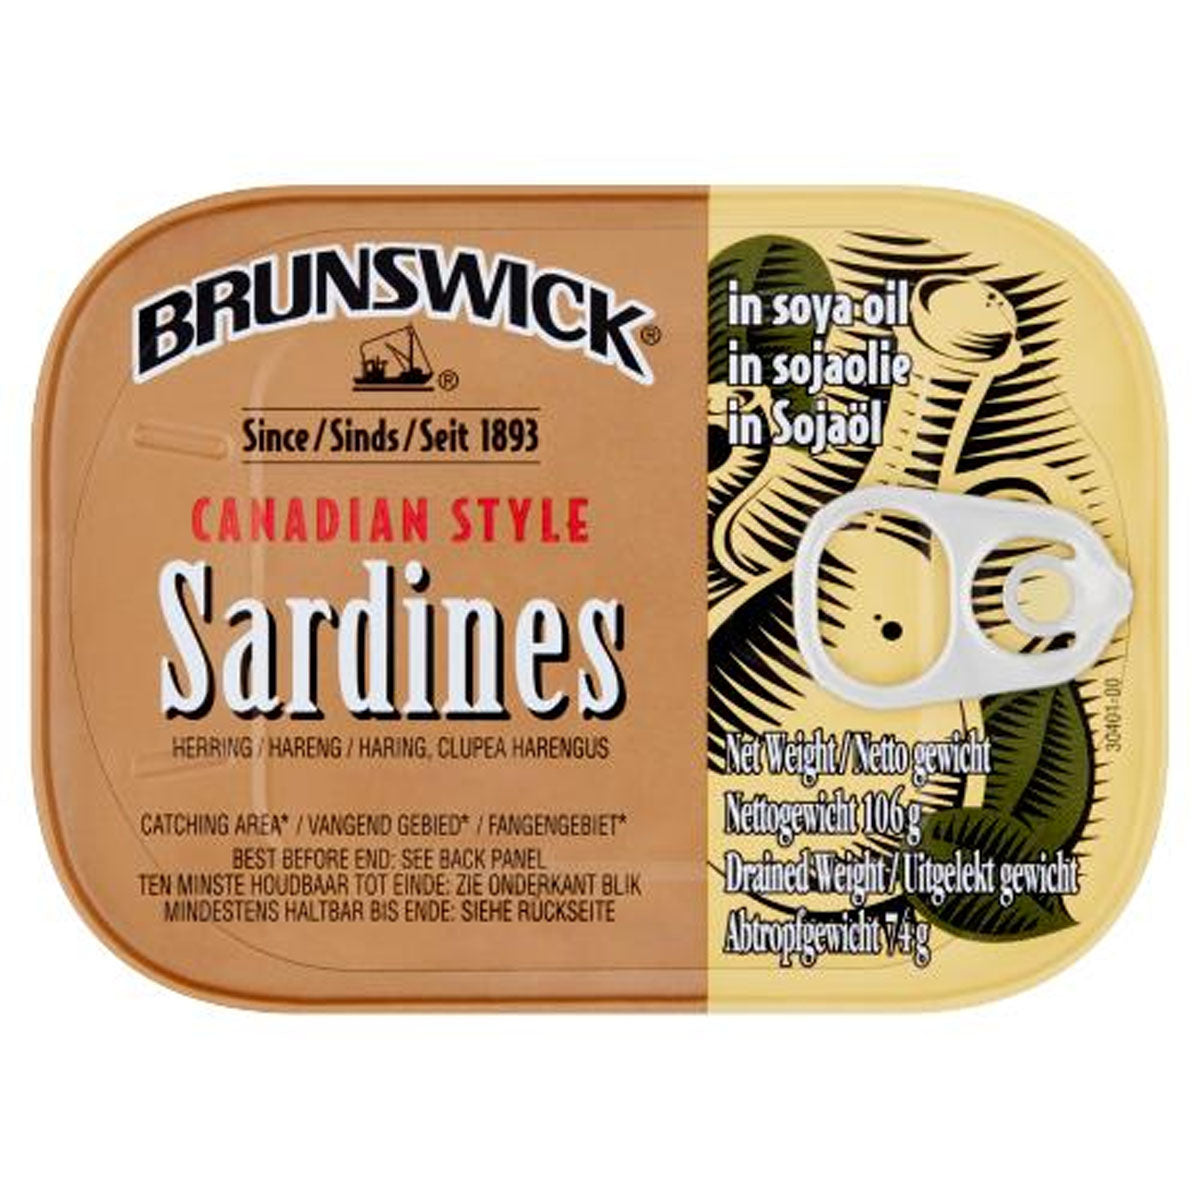 Brunswick - Canadian Style Sardines in Soya Oil - 106g.